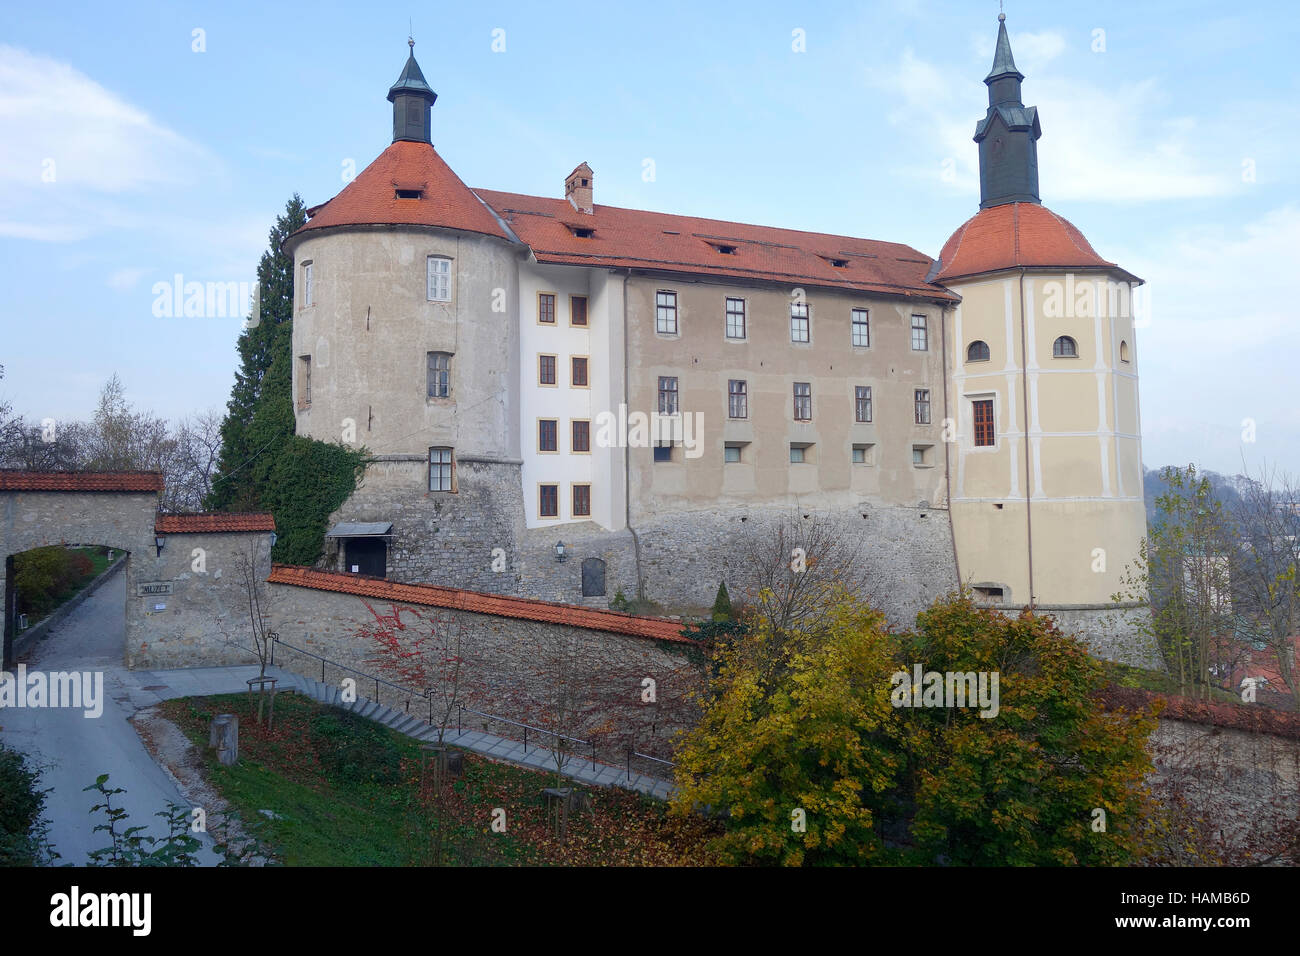 Mittelalterliche Burg von Skofja Loka, Slowenien. Stockfoto